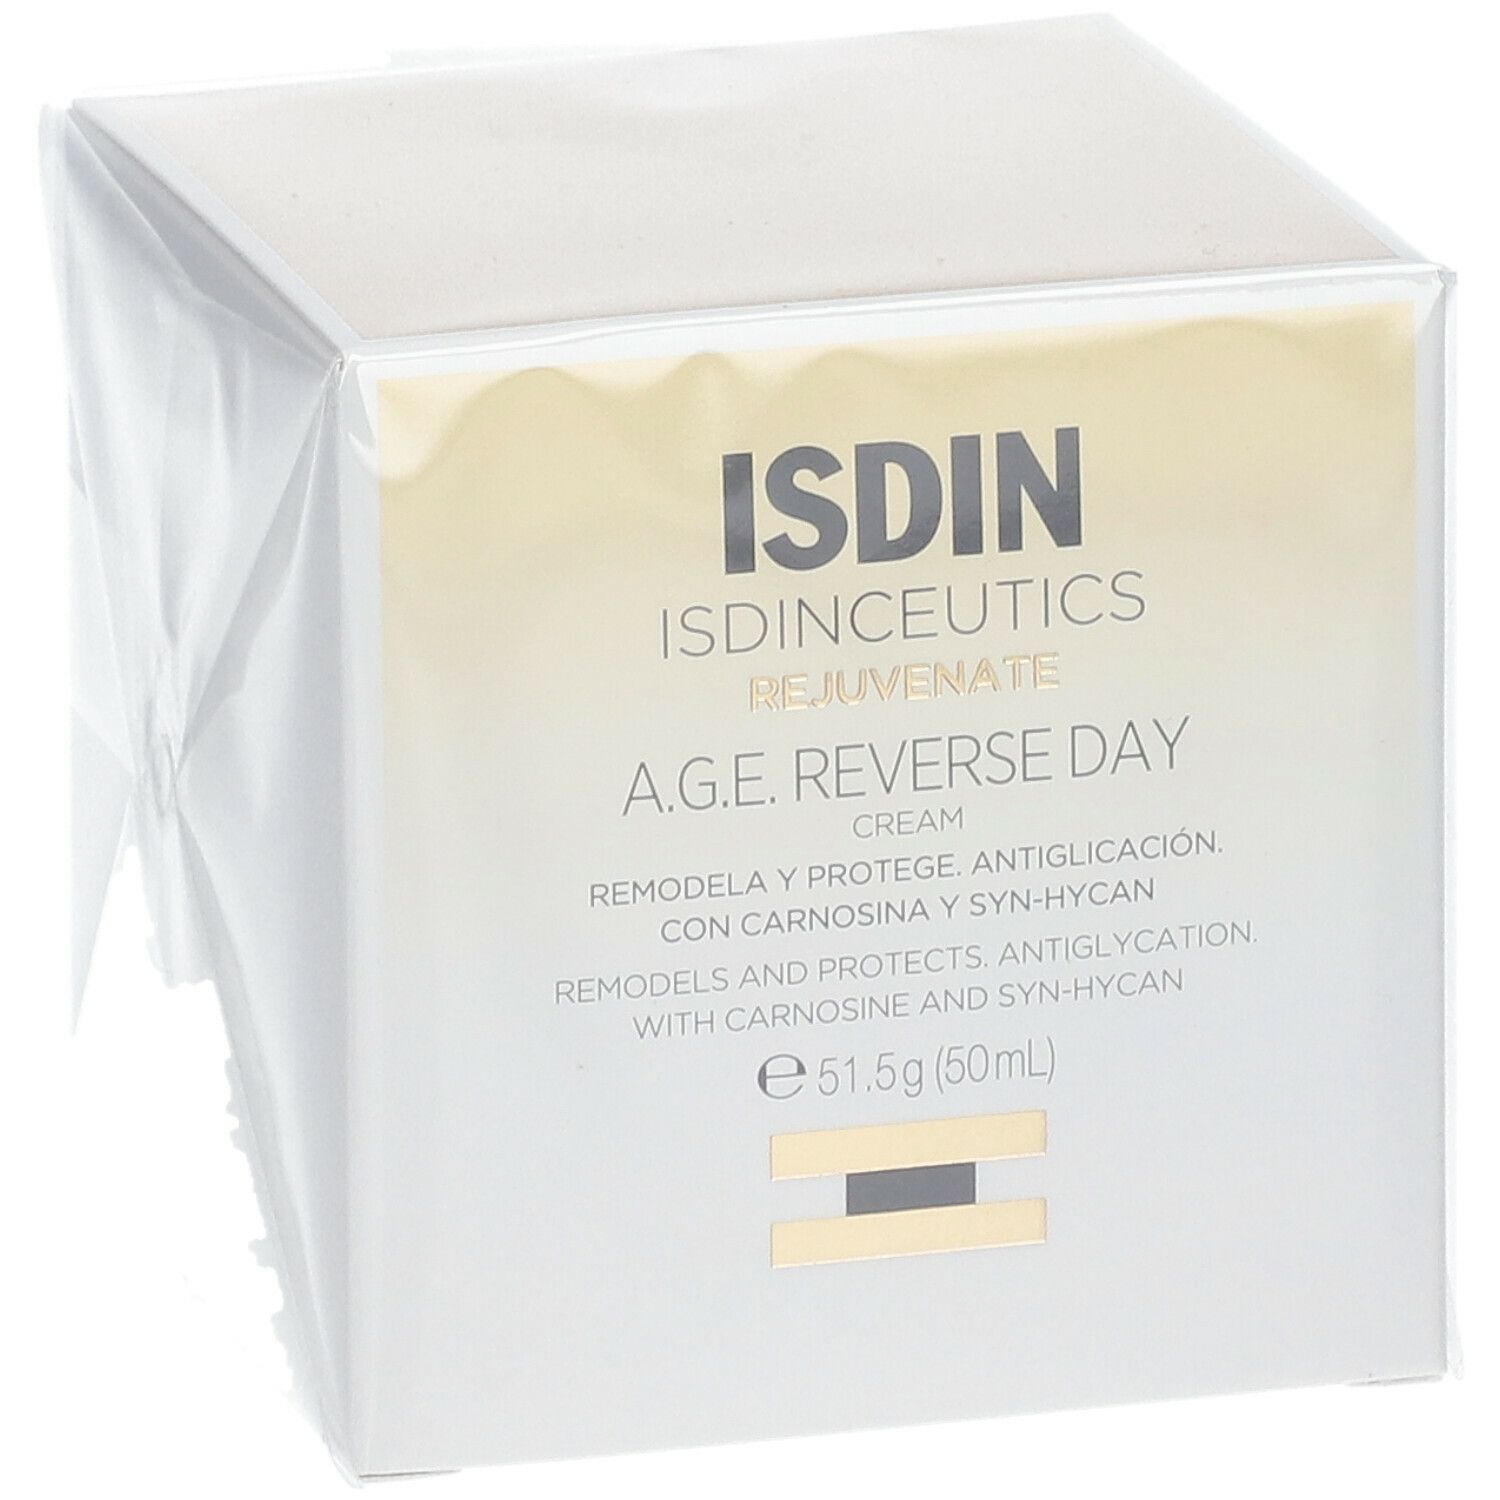 ISDIN Isdinceutics A.G.E. Reverse